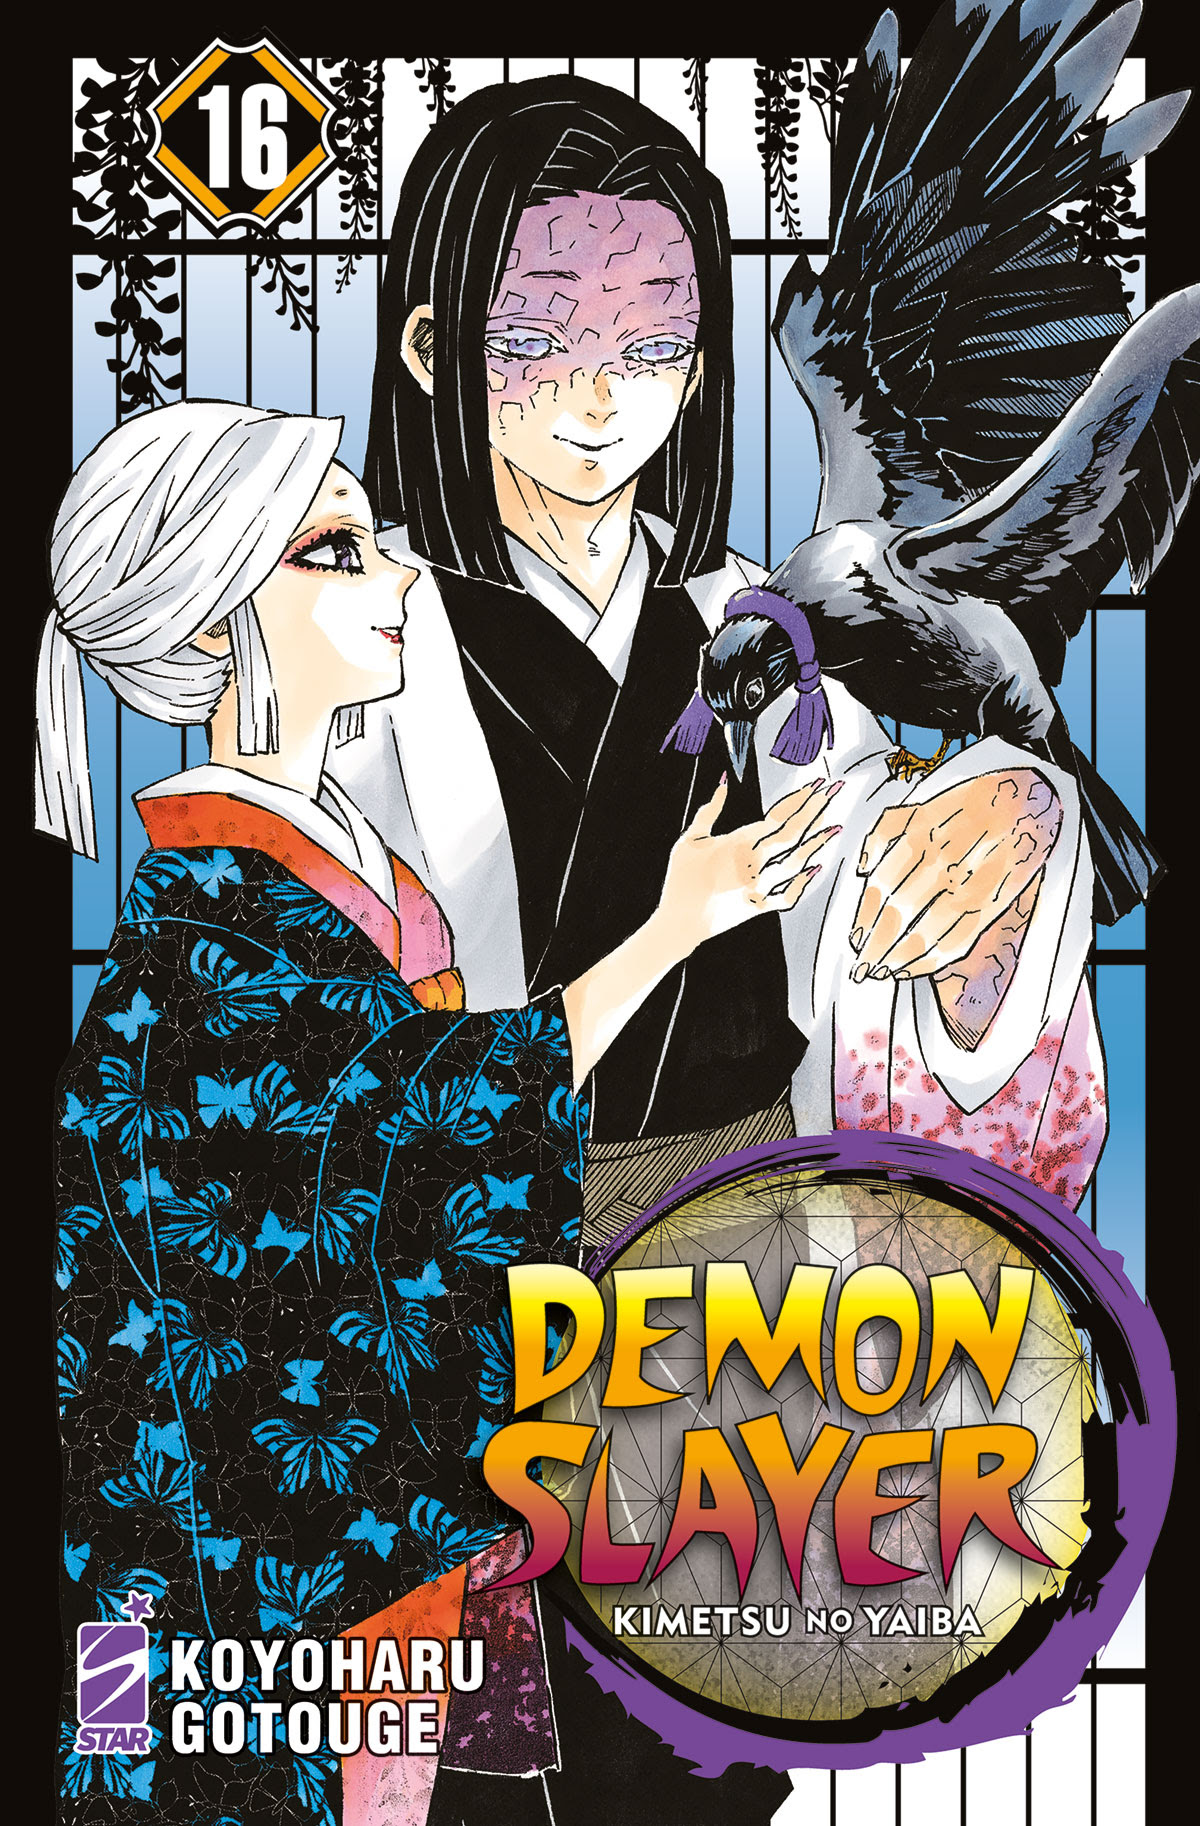 Demon Slayer: Kimetsu no Yaiba, Vol. 16 in Kindle/PDF/EPUB